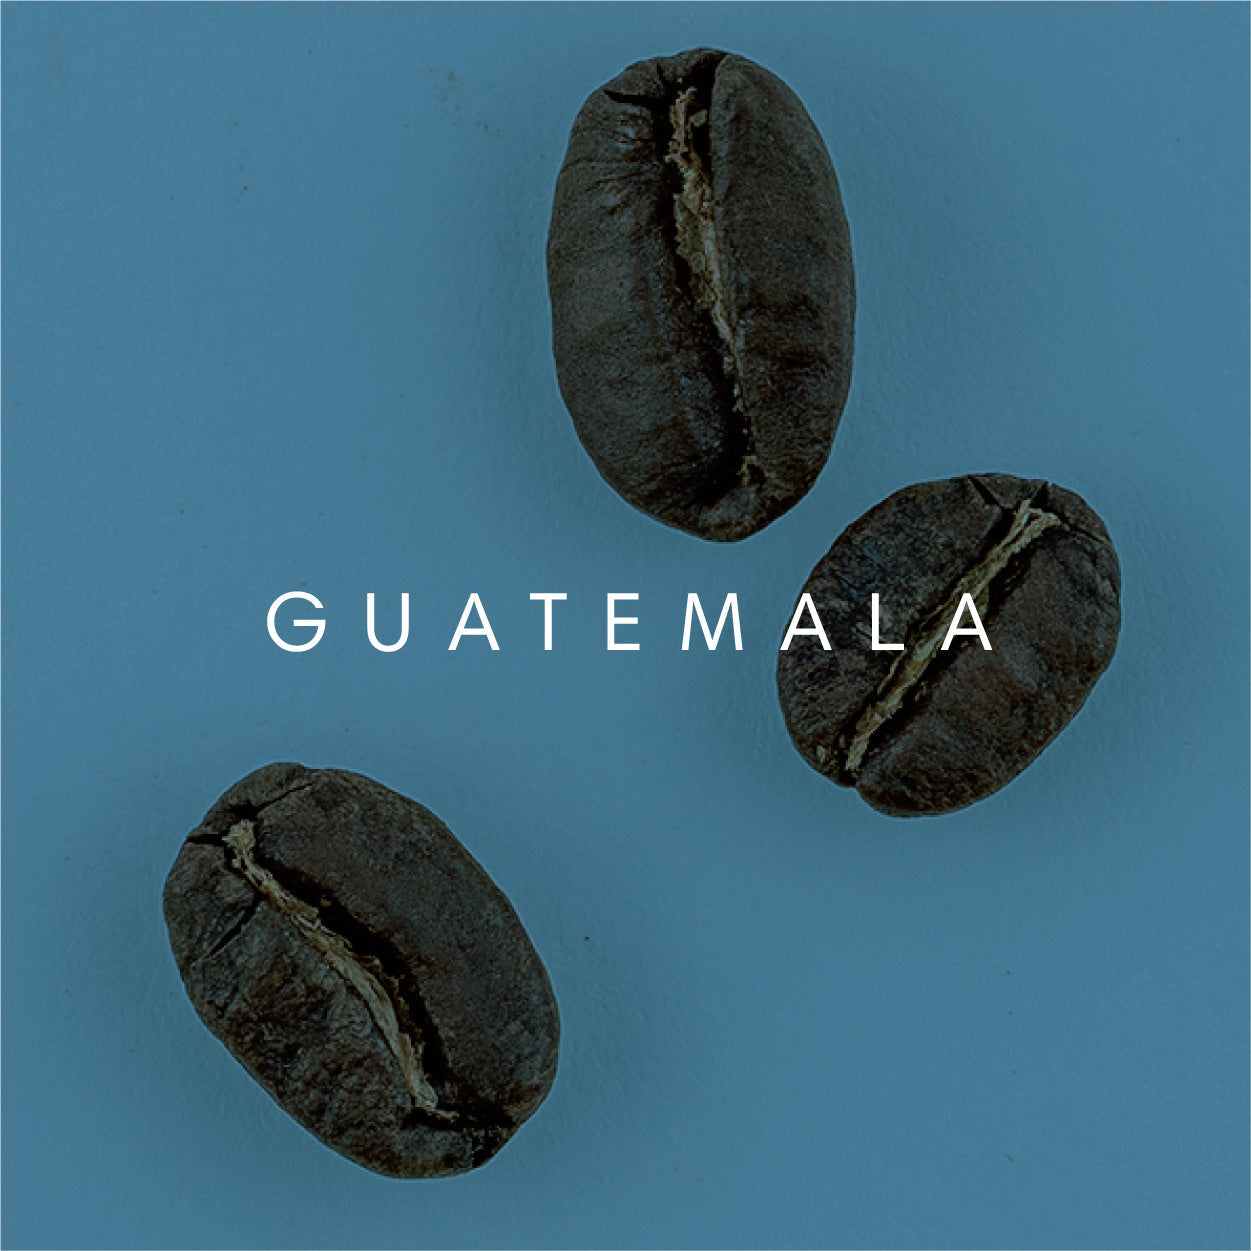 Guatemala, Primavera Coffee